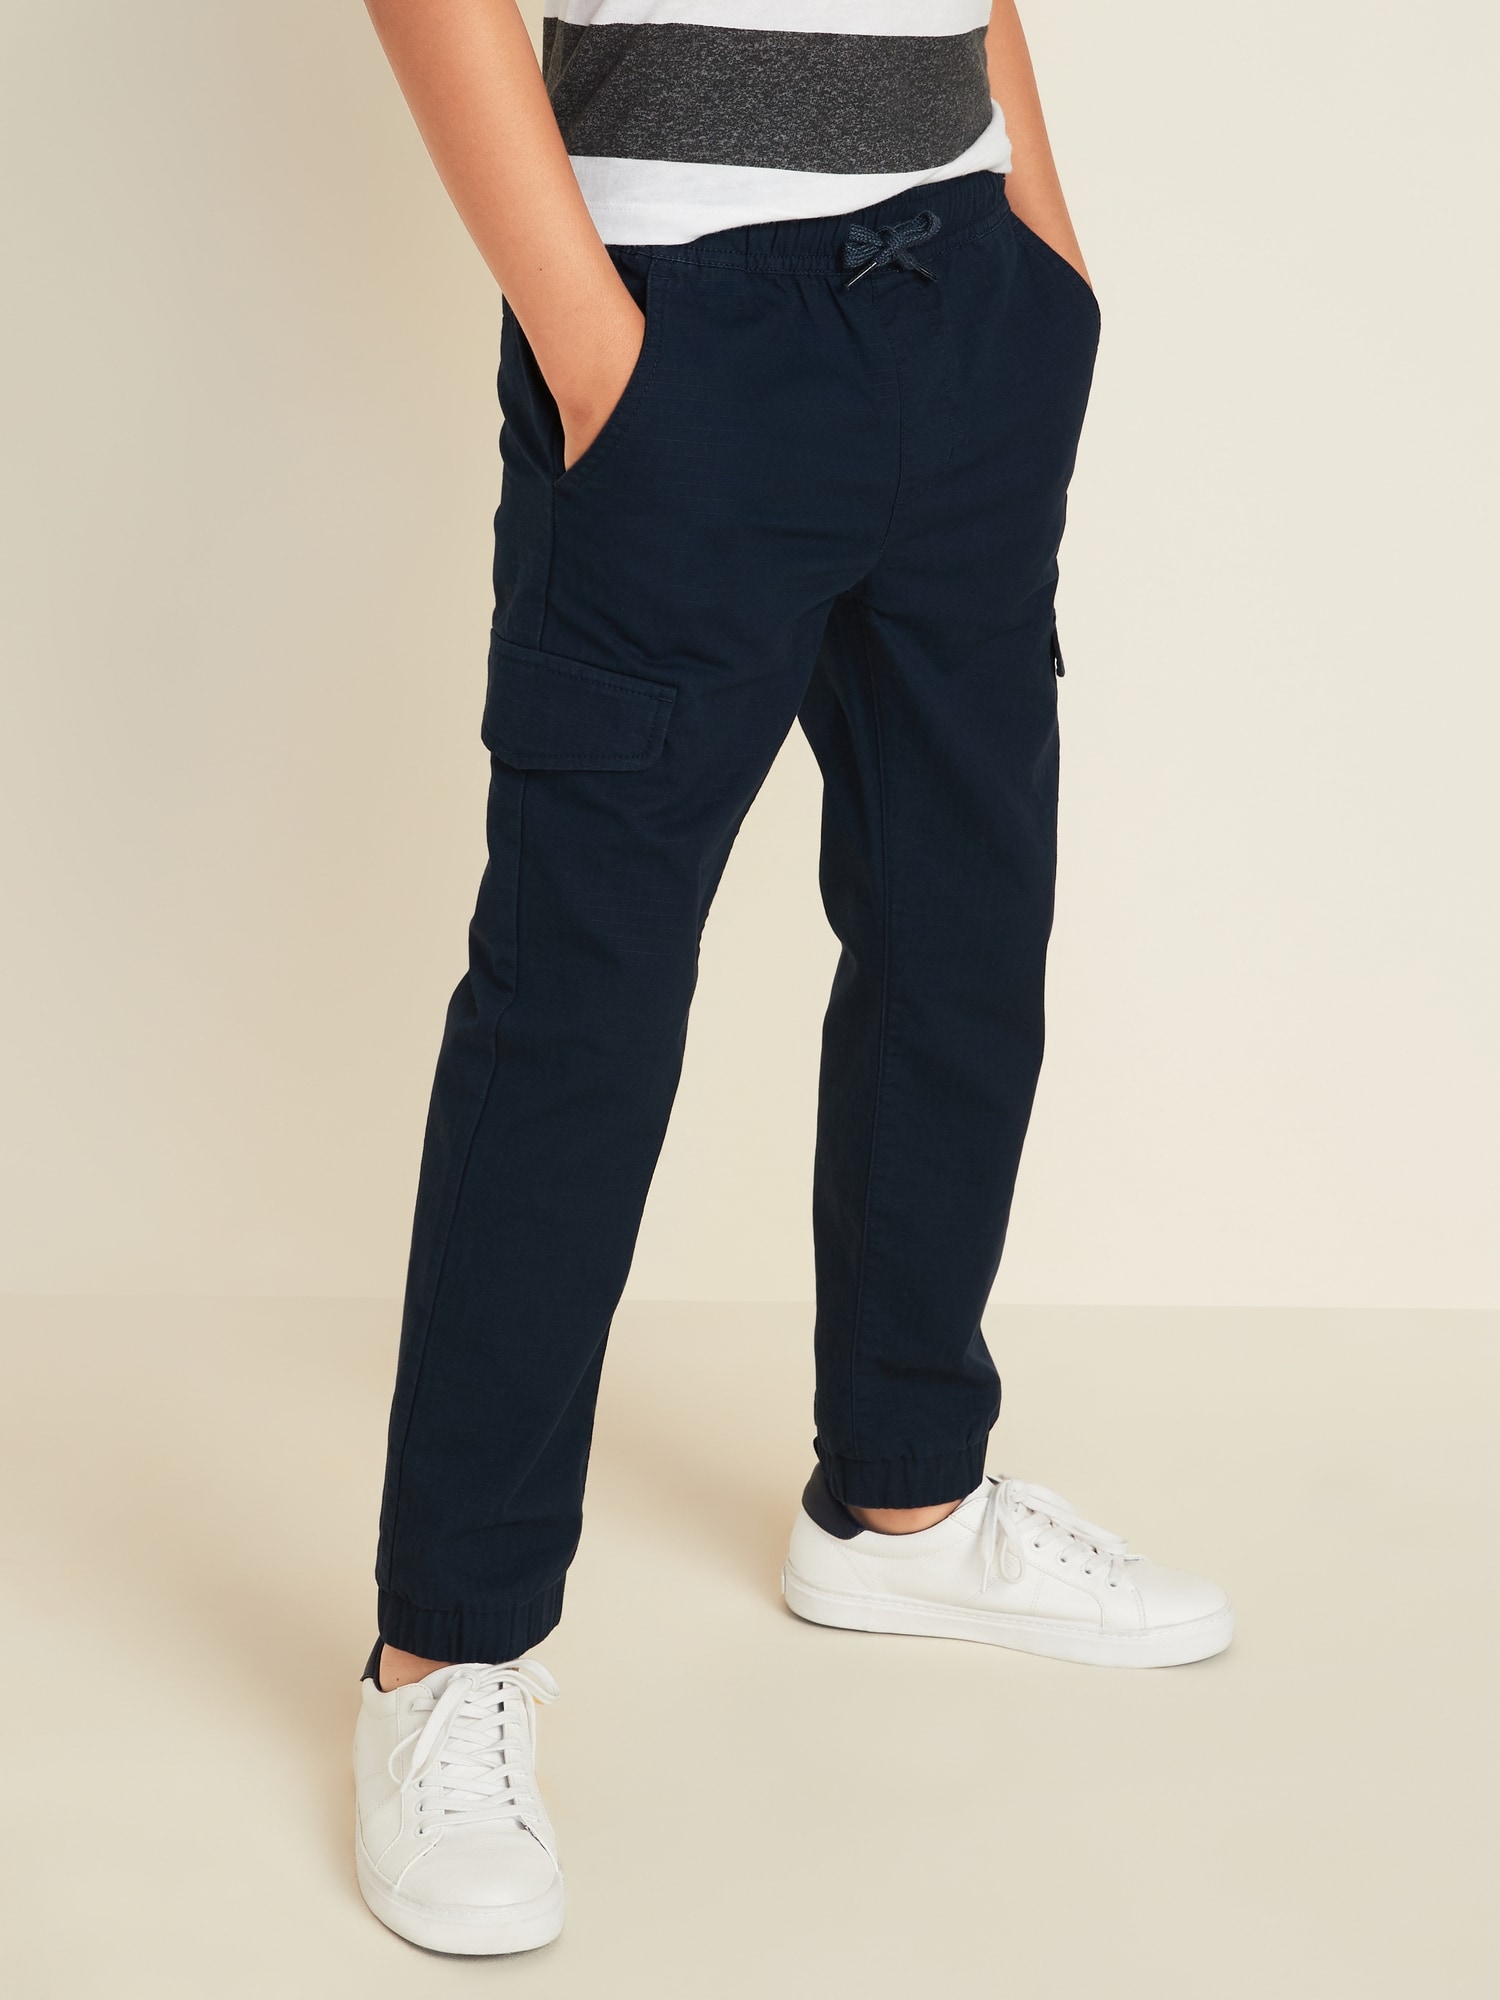 navy blue cargo jogger pants